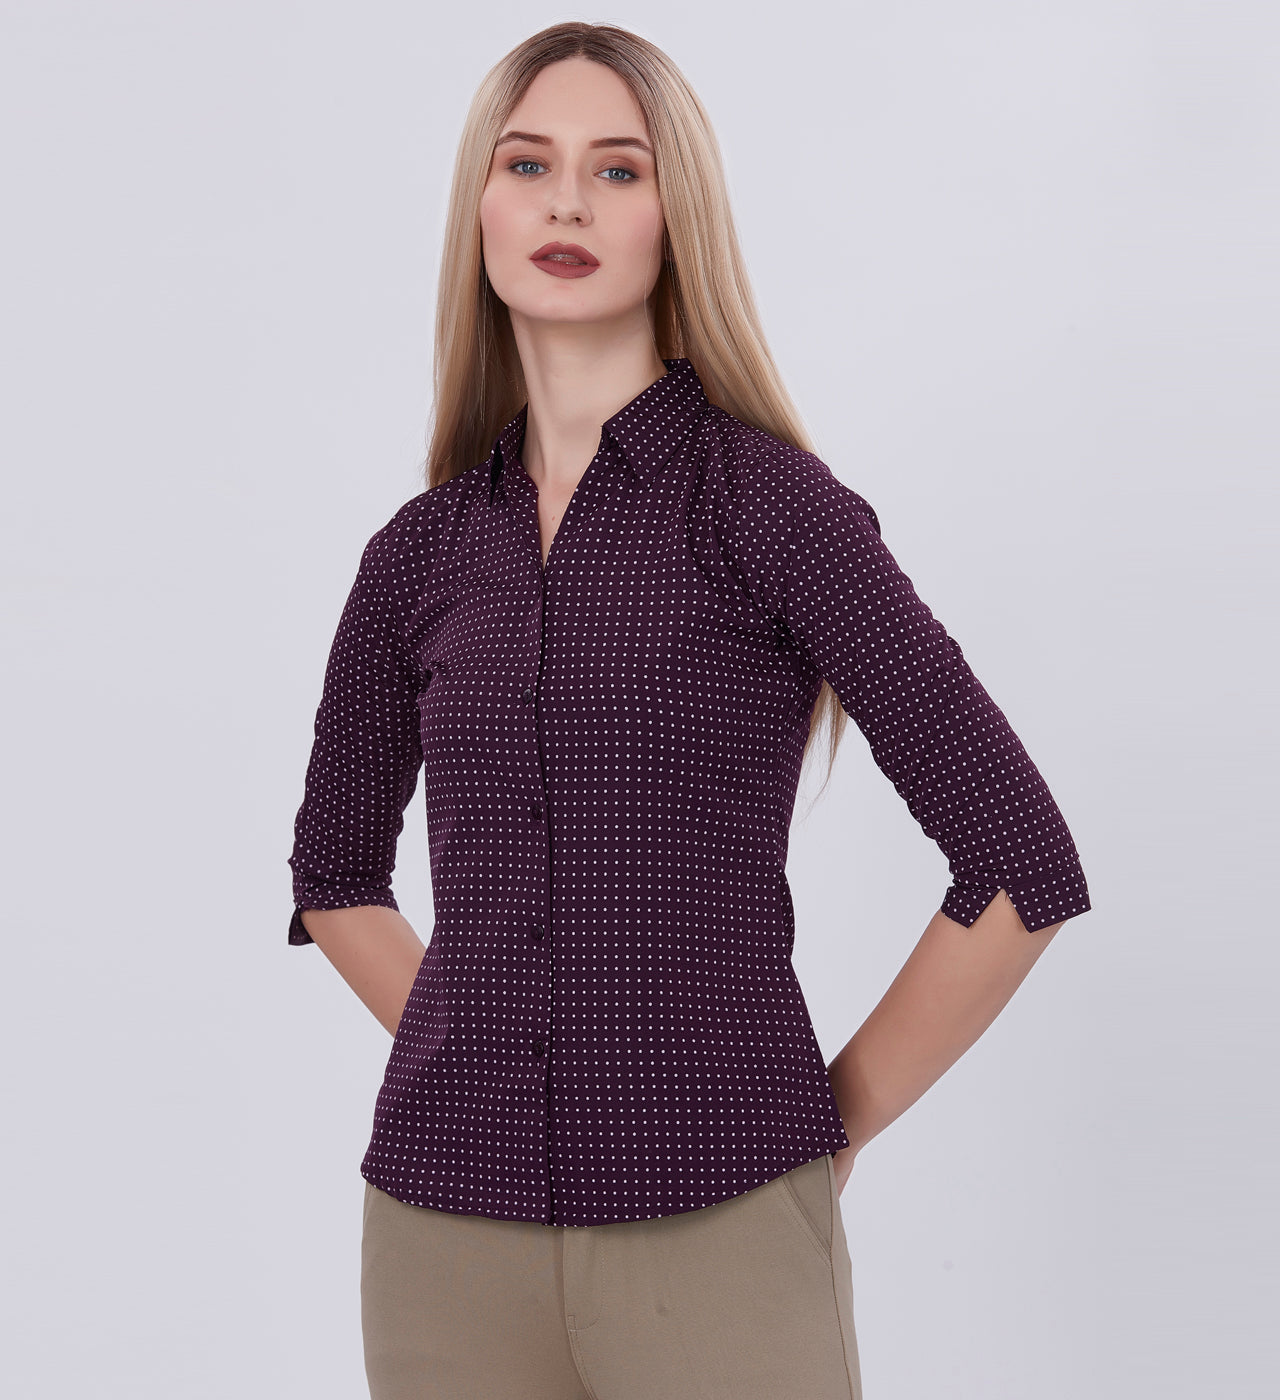 Blum Denim Women's (1003) Navy Blue Formal Shirt with Shirt Collar, 3/4 Sleeves, in Inbox Fabric